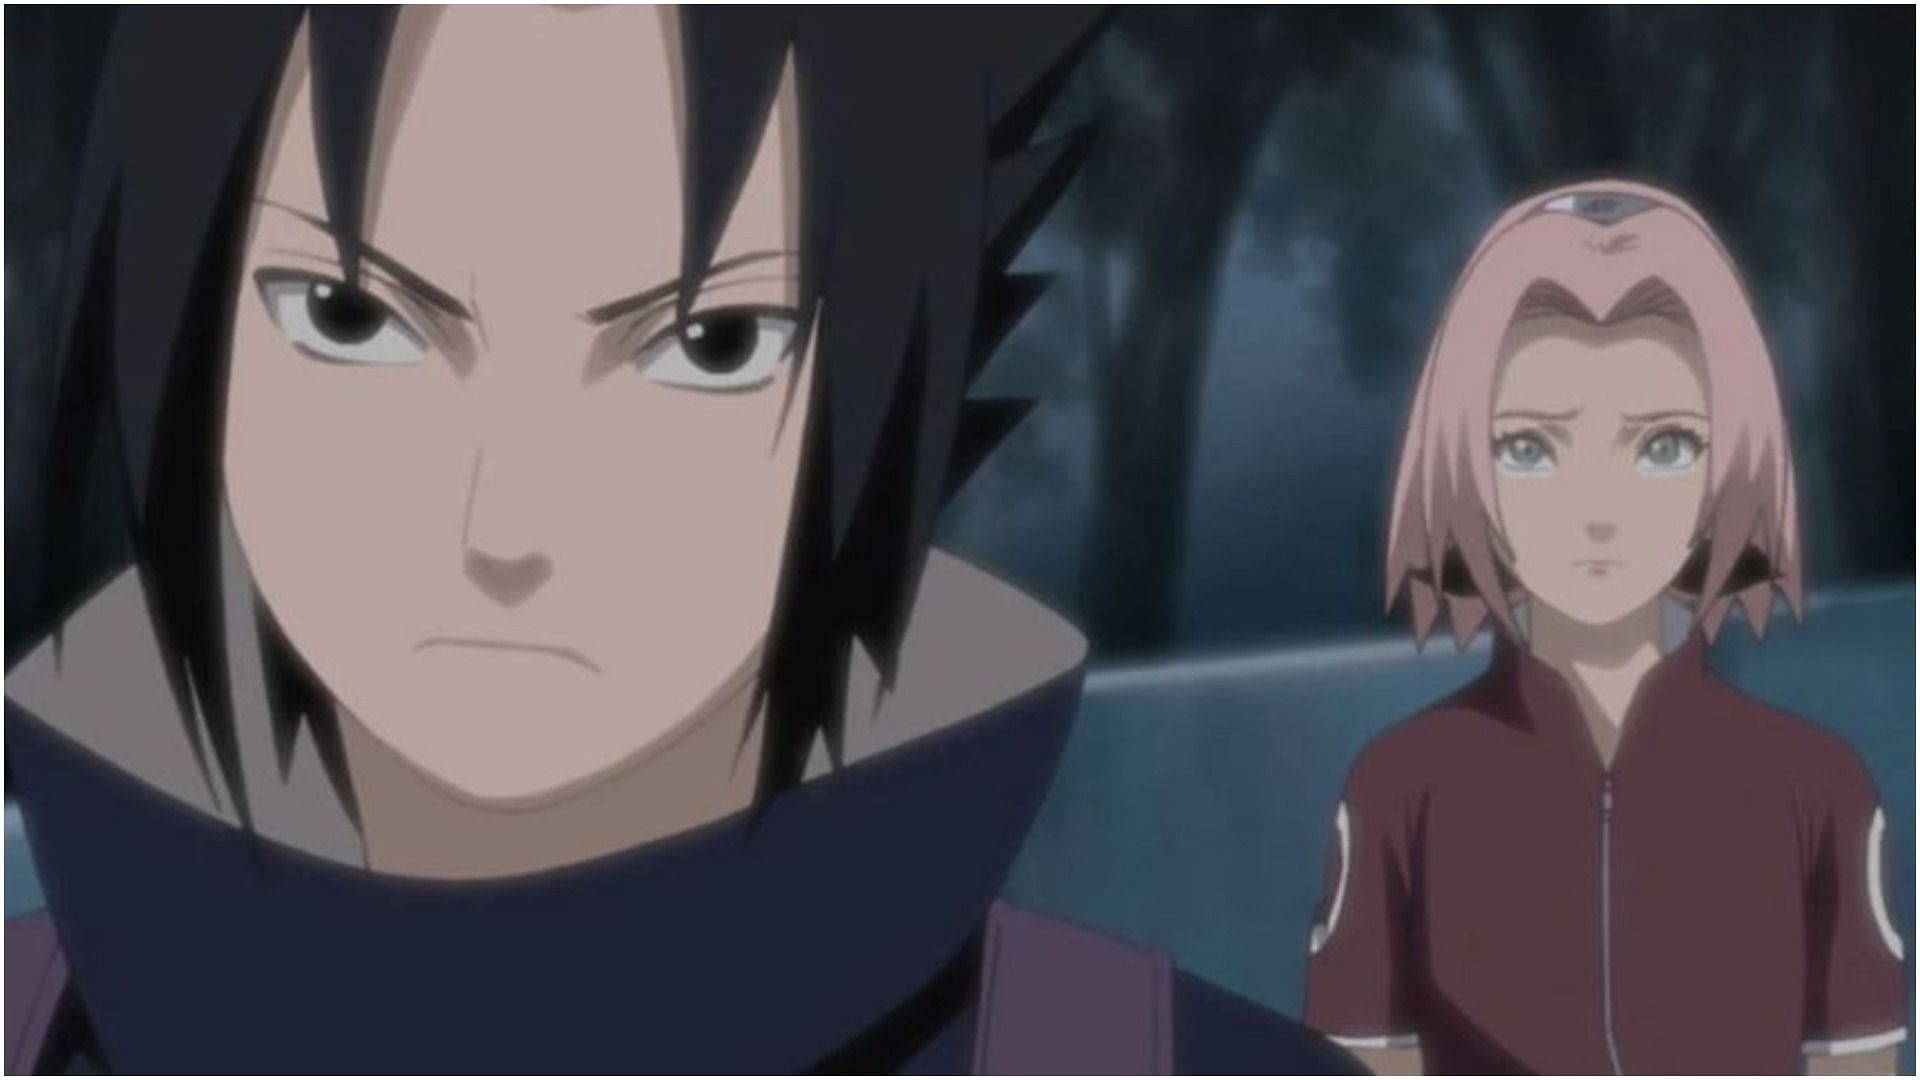 Sakura bothered almost everyone in the series regarding Sasuke (Image via Naruto)